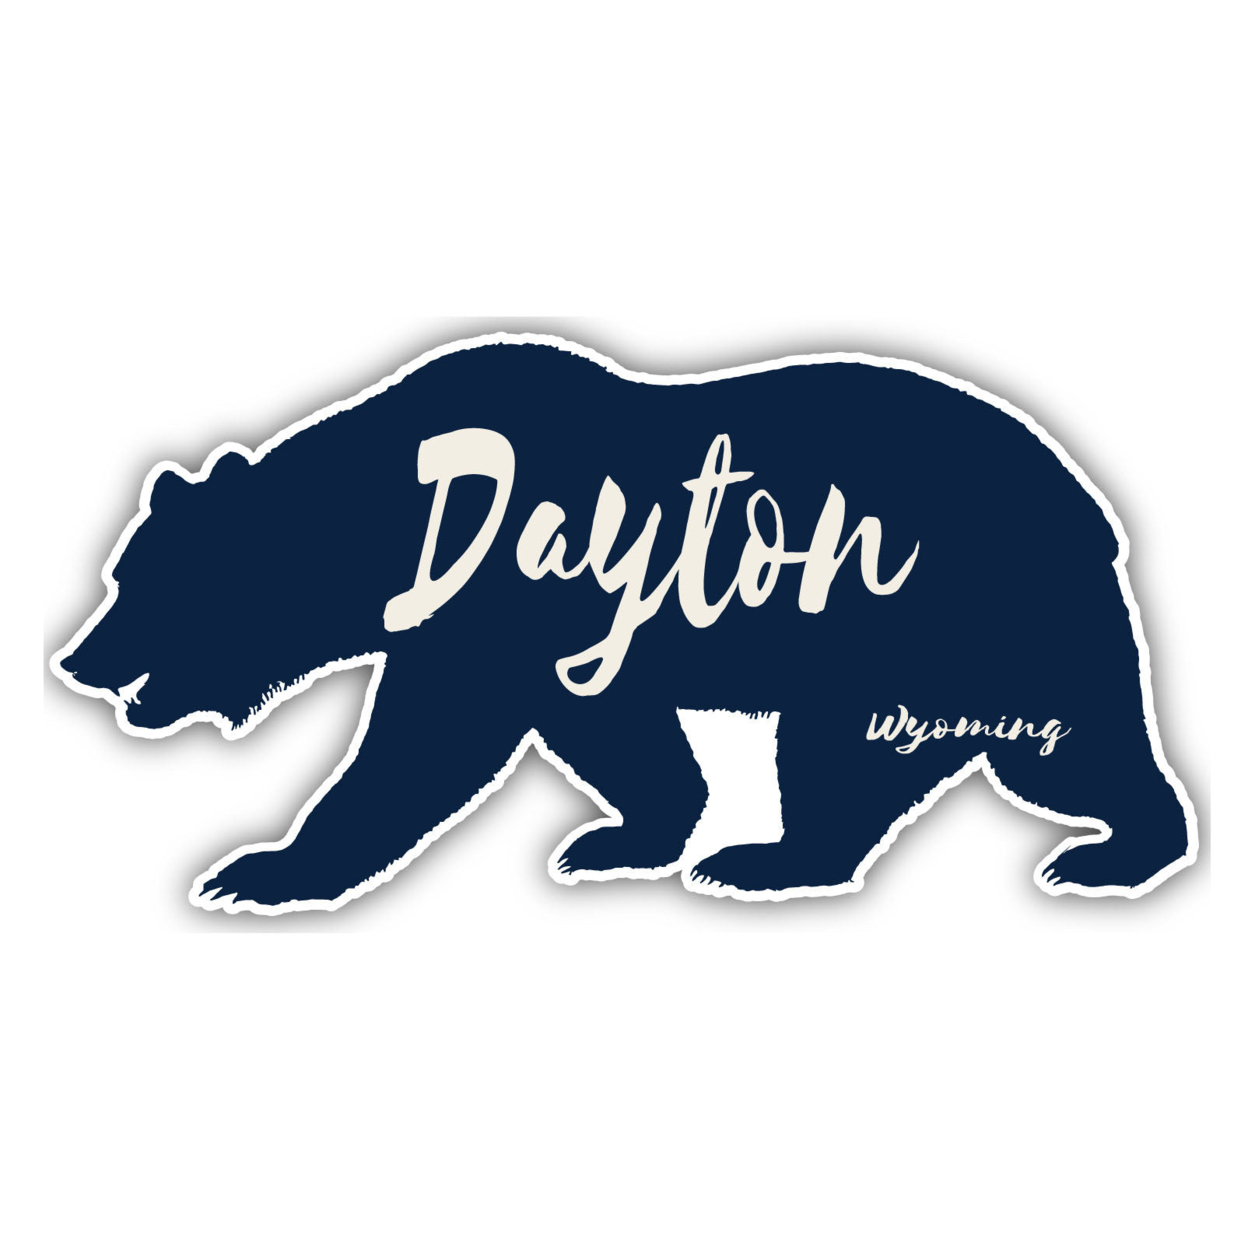 Dayton Wyoming Souvenir Decorative Stickers (Choose Theme And Size) - Single Unit, 10-Inch, Bear